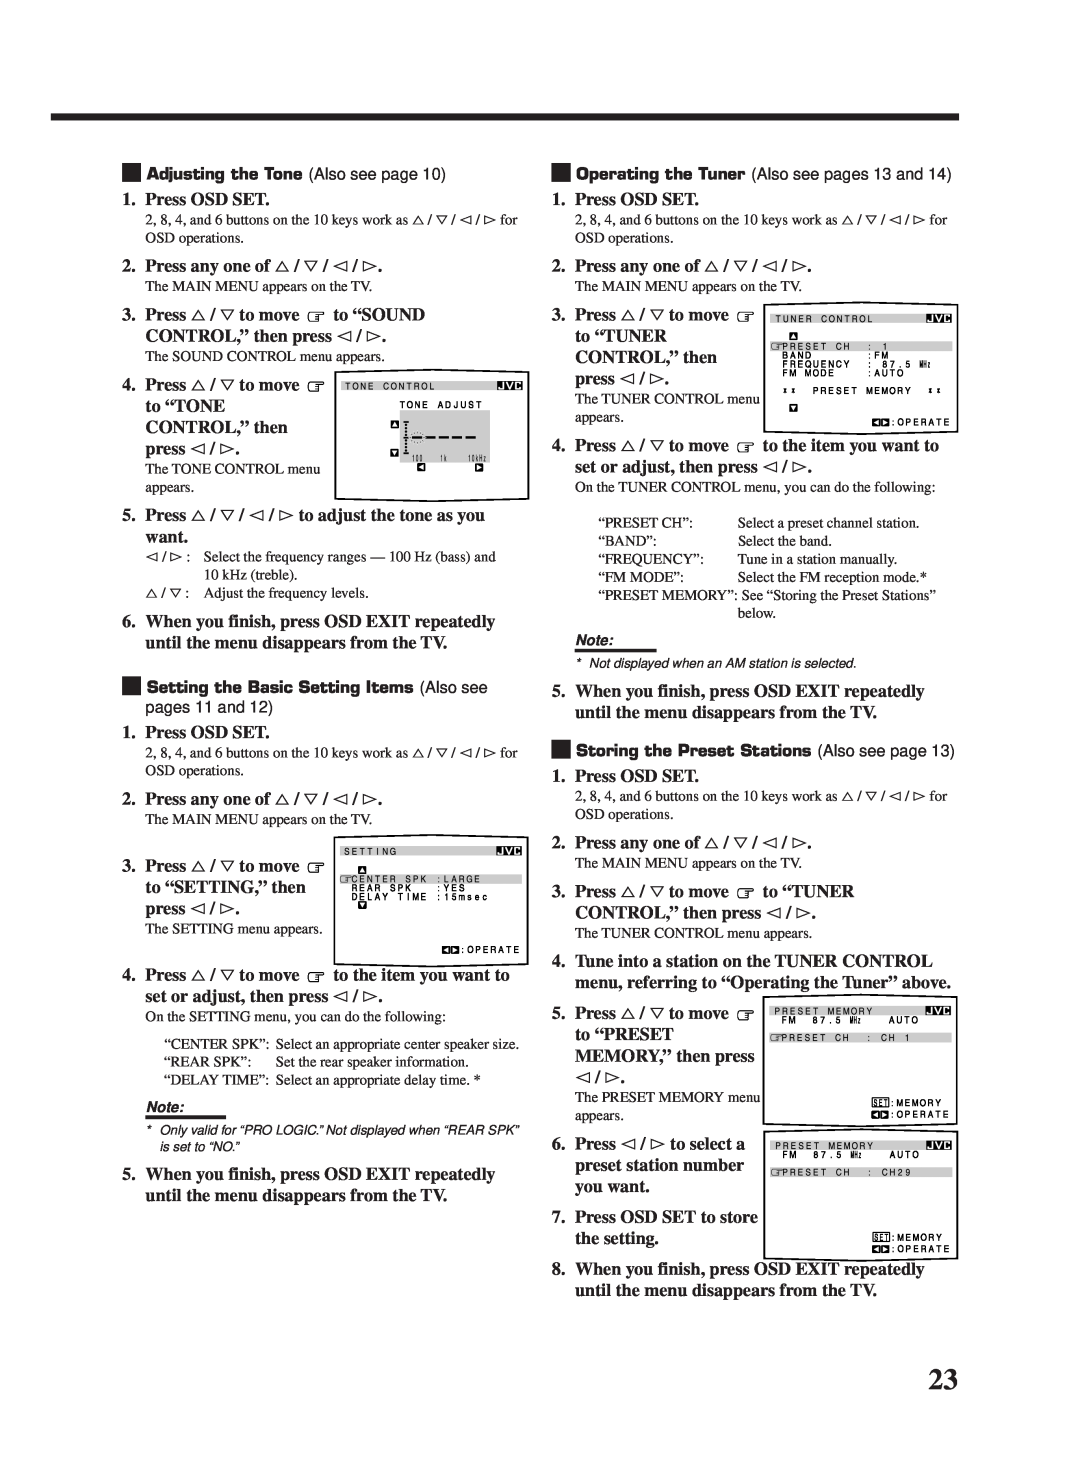 JVC RX-668VBK manual Press OSD SET 